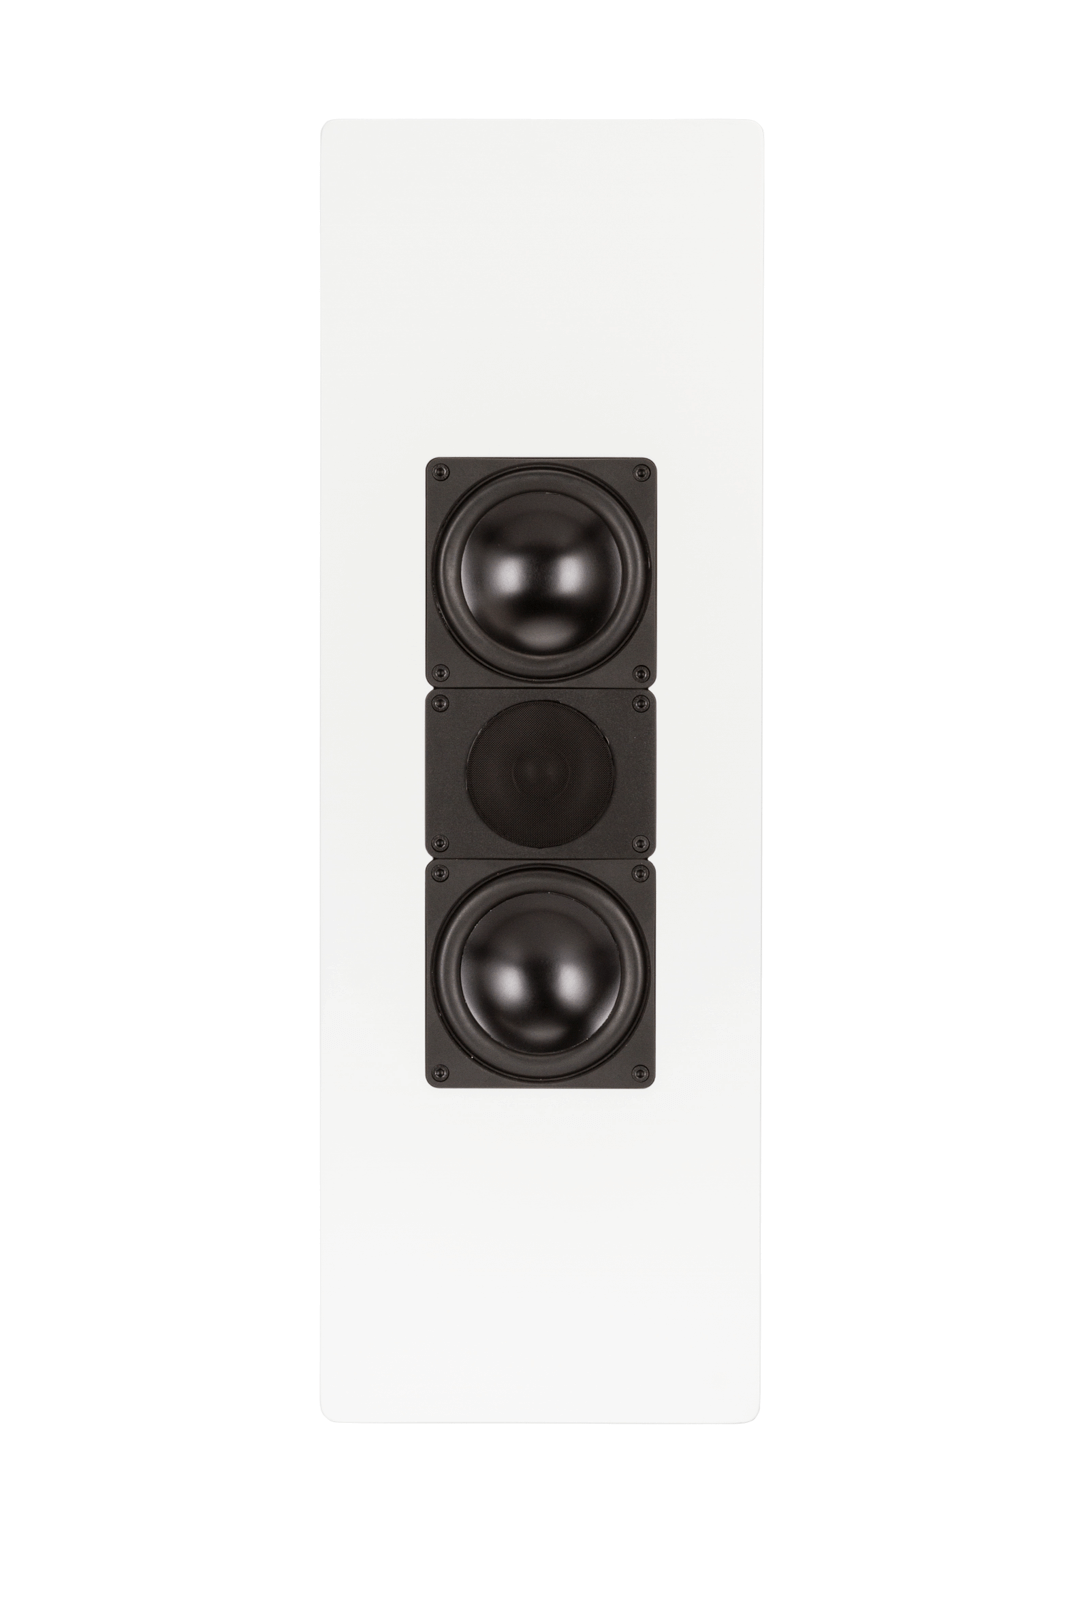 Elac WS-1465 On-Wall Speaker (Each)